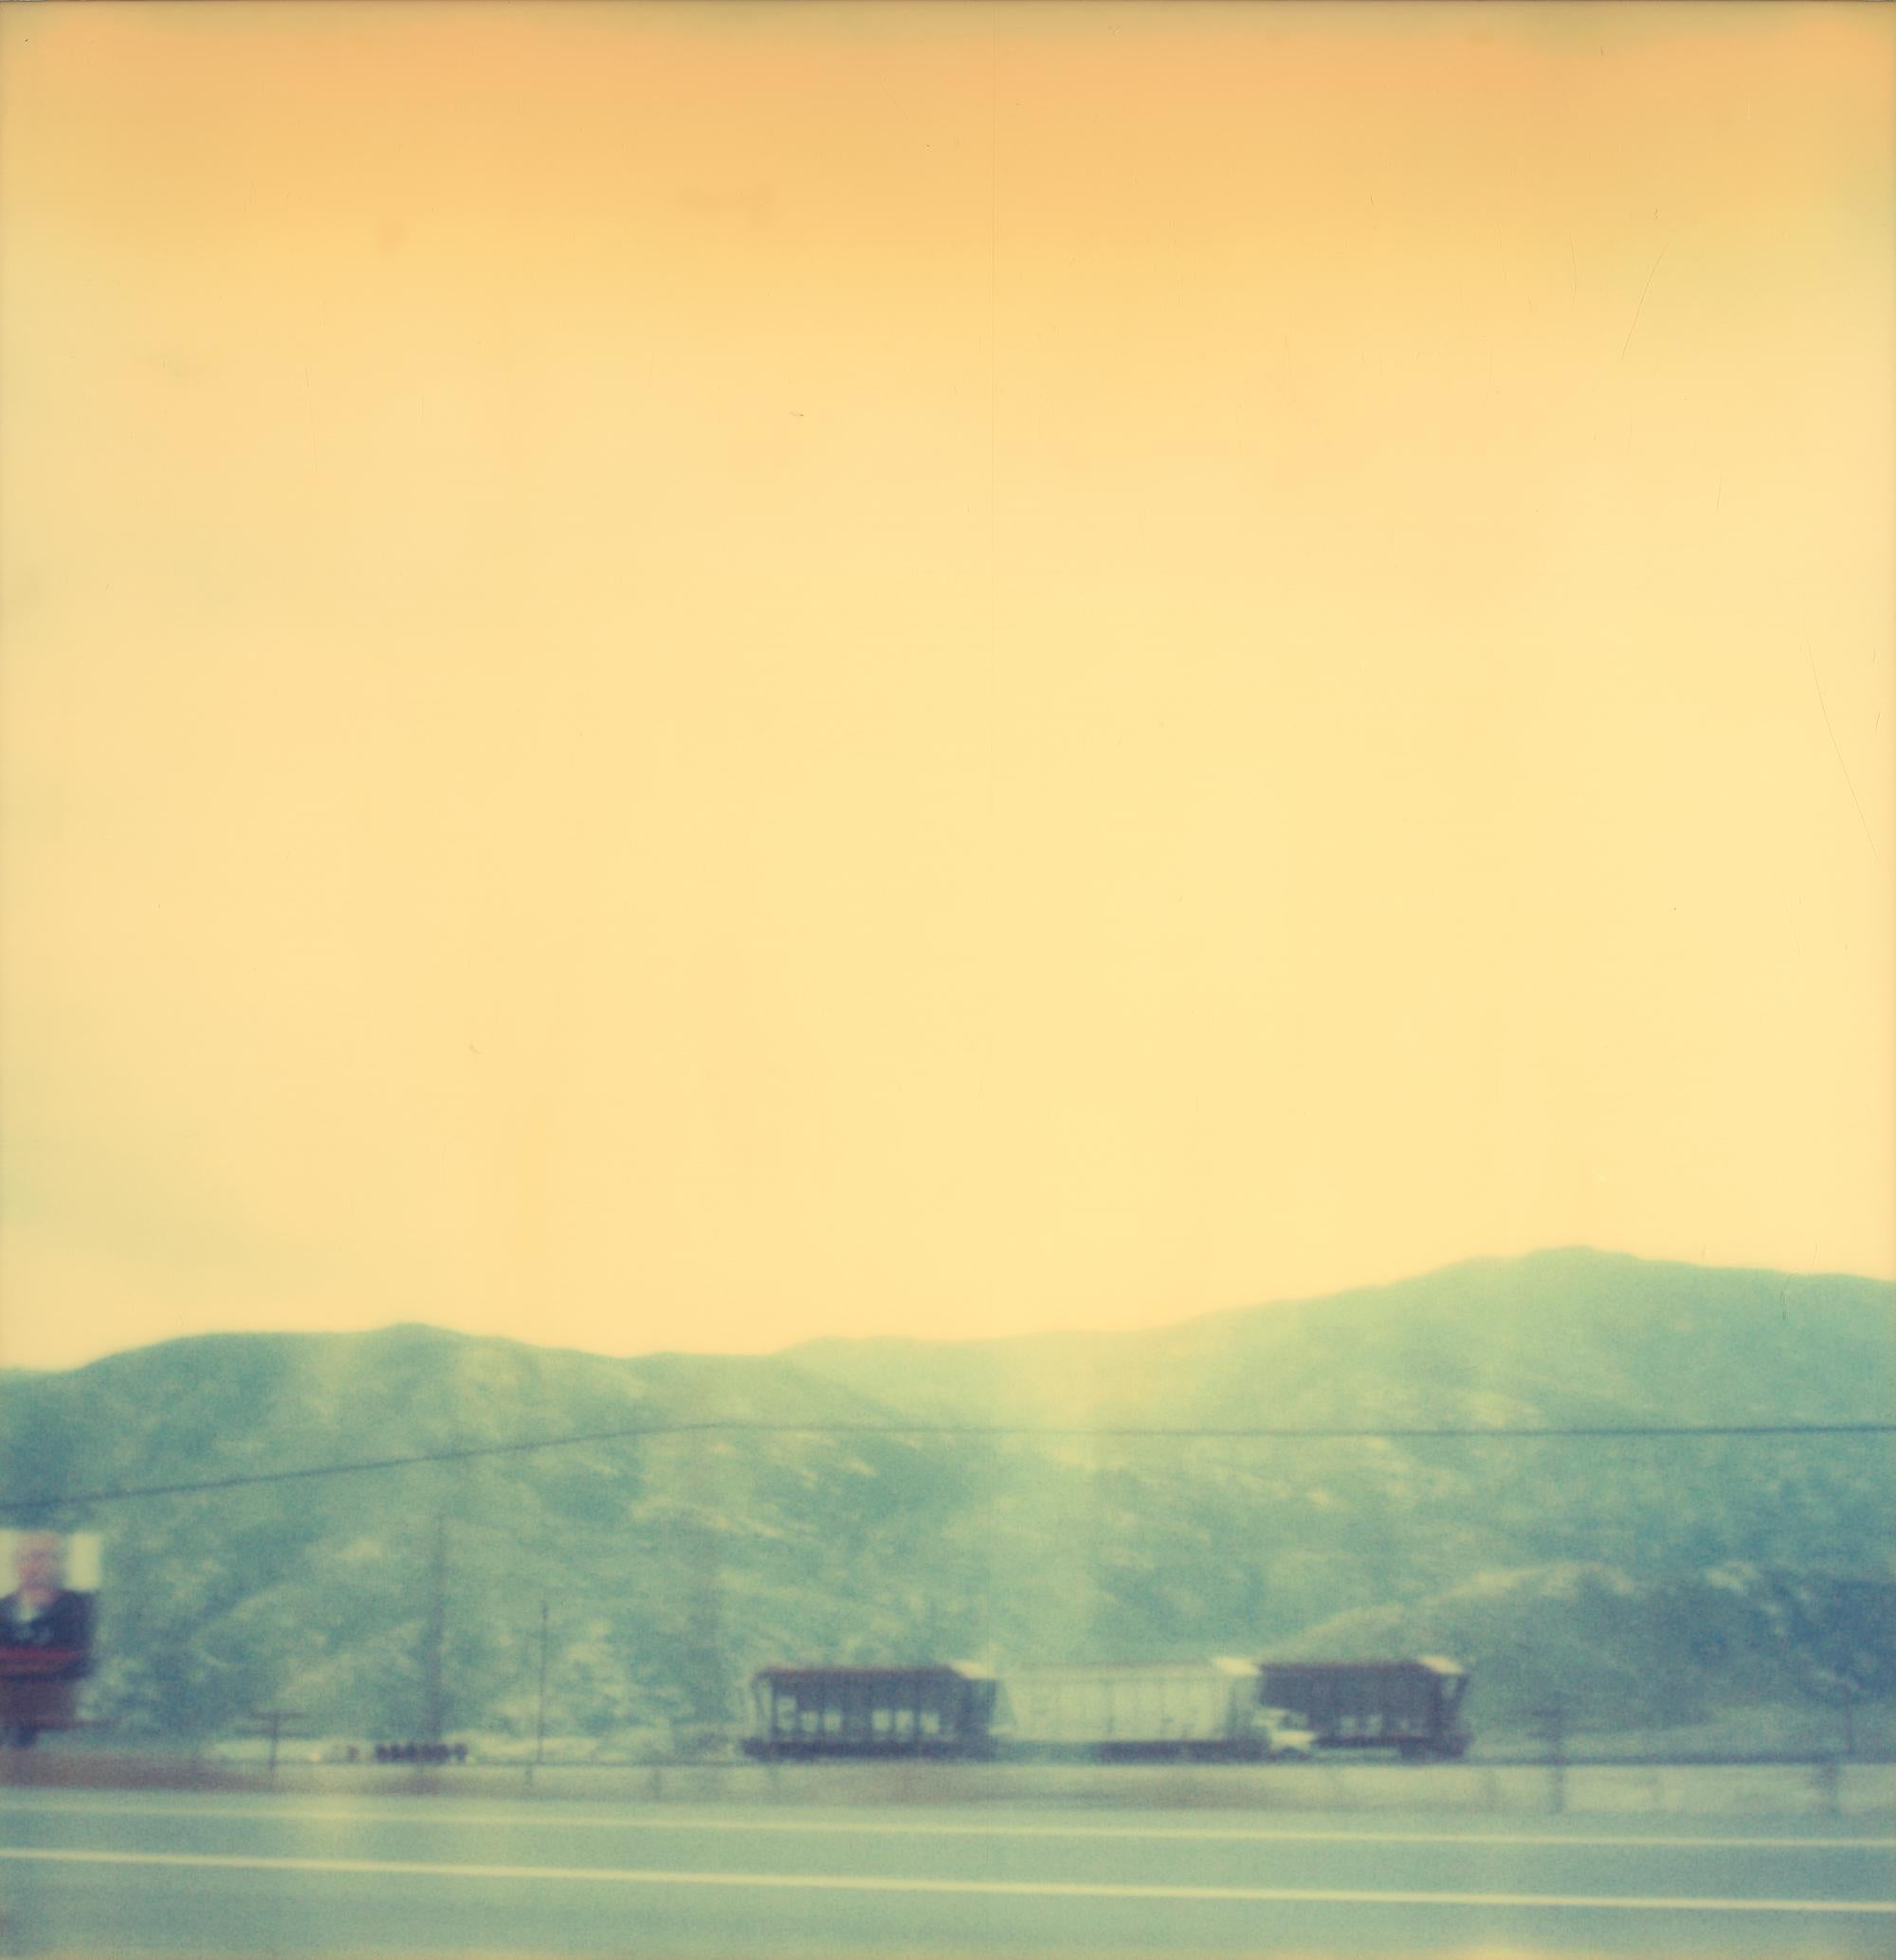 Other Desert Cities (Sidewinder) - Polaroid, 21st Century, Contemporary 3